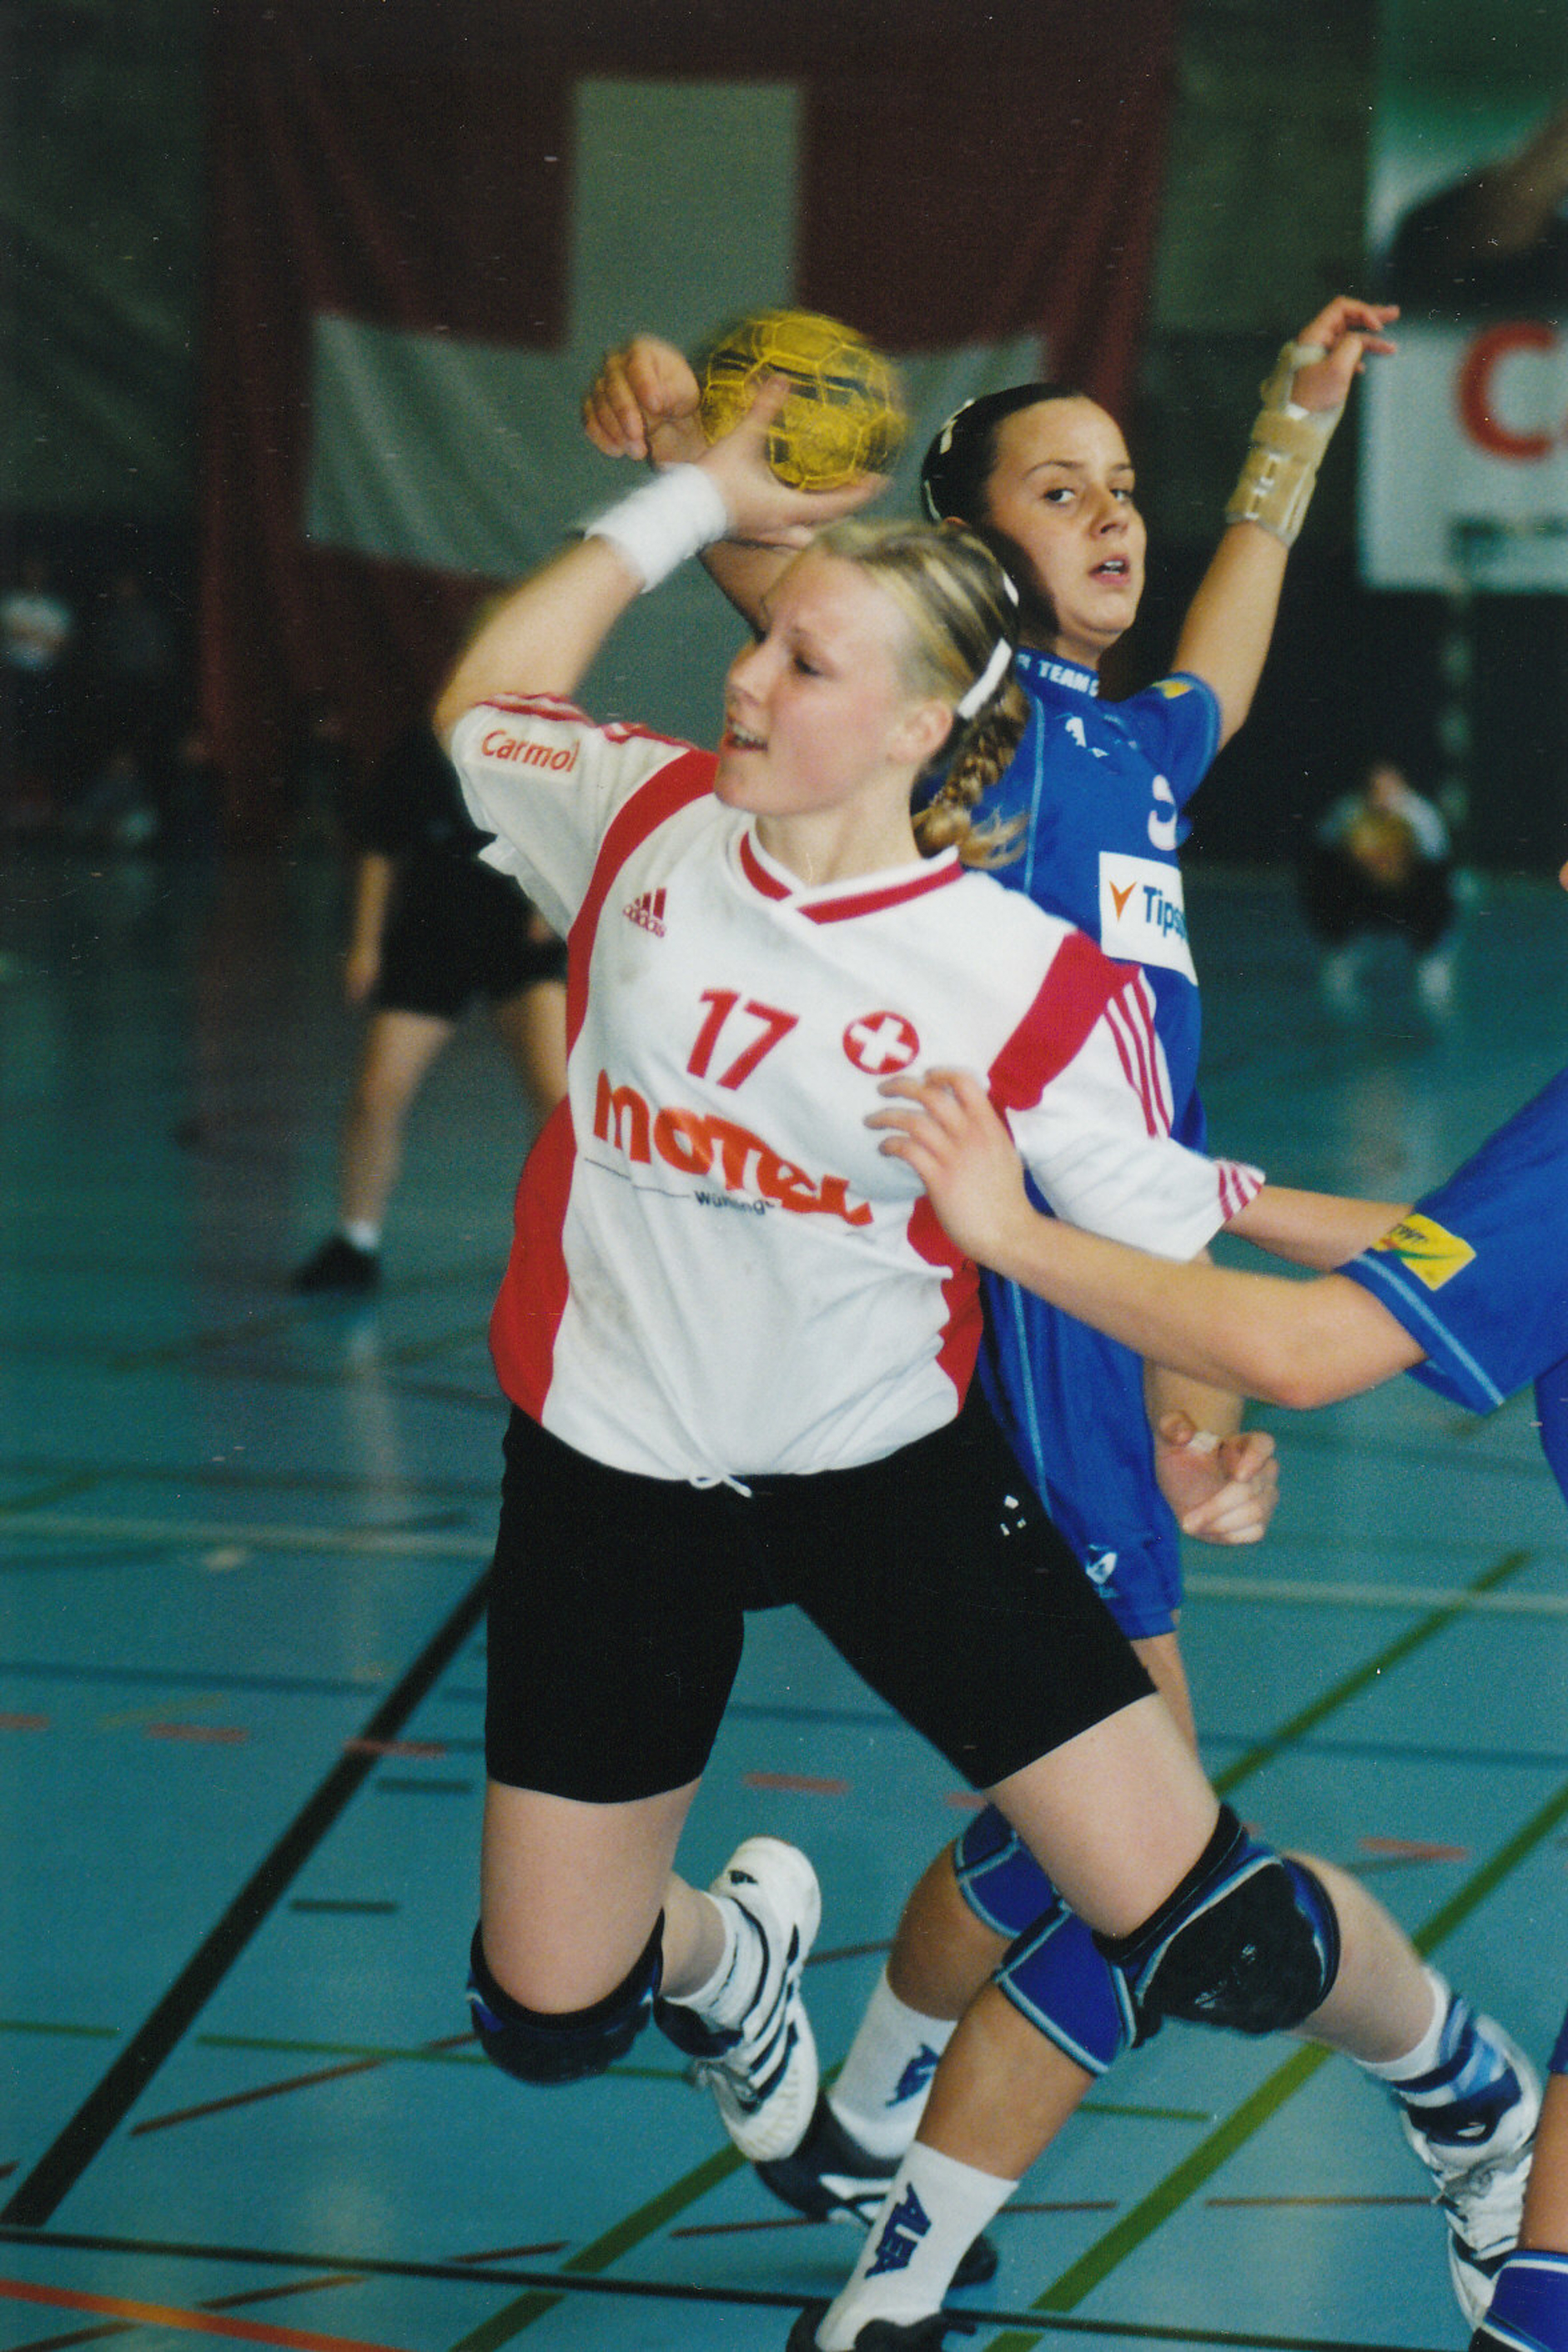 2003-04-19 Frauen Nati U20 SUI-CZE 23-28 Stans Eichli - Nicole Dinkel3.jpg